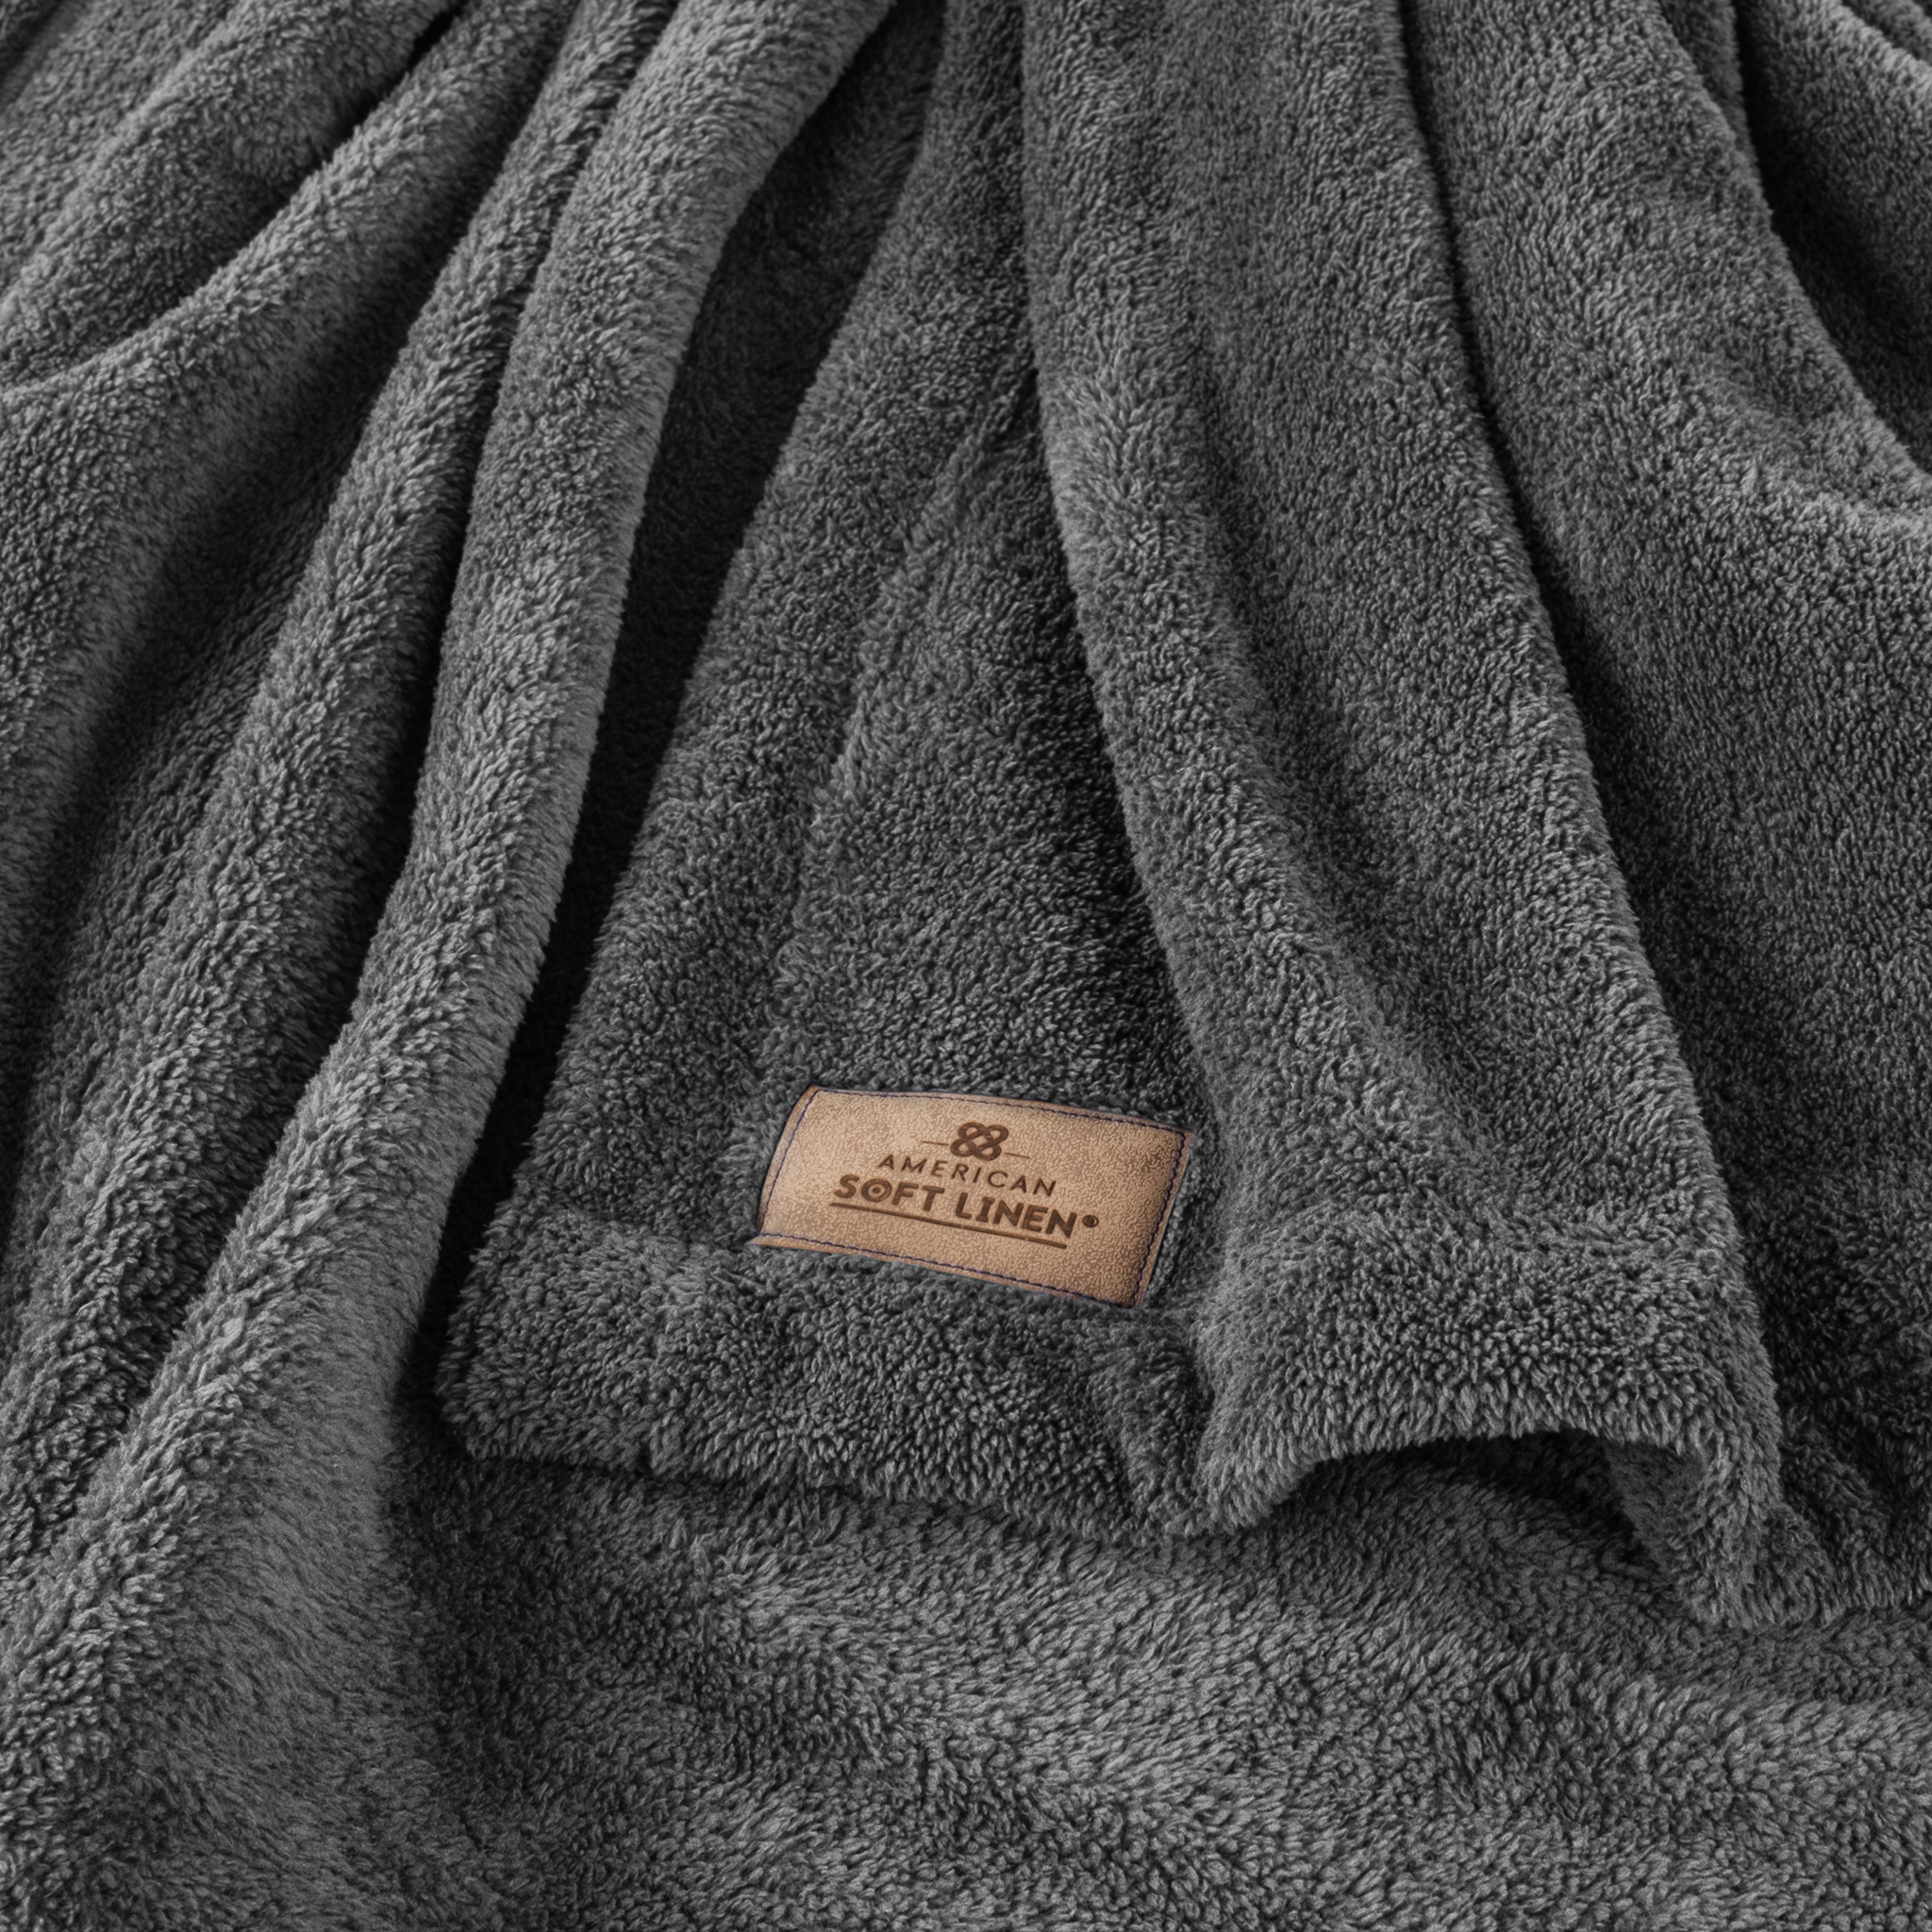 American Soft Linen - Bedding Fleece Blanket - Queen Size 85x90 inches - Gray - 4